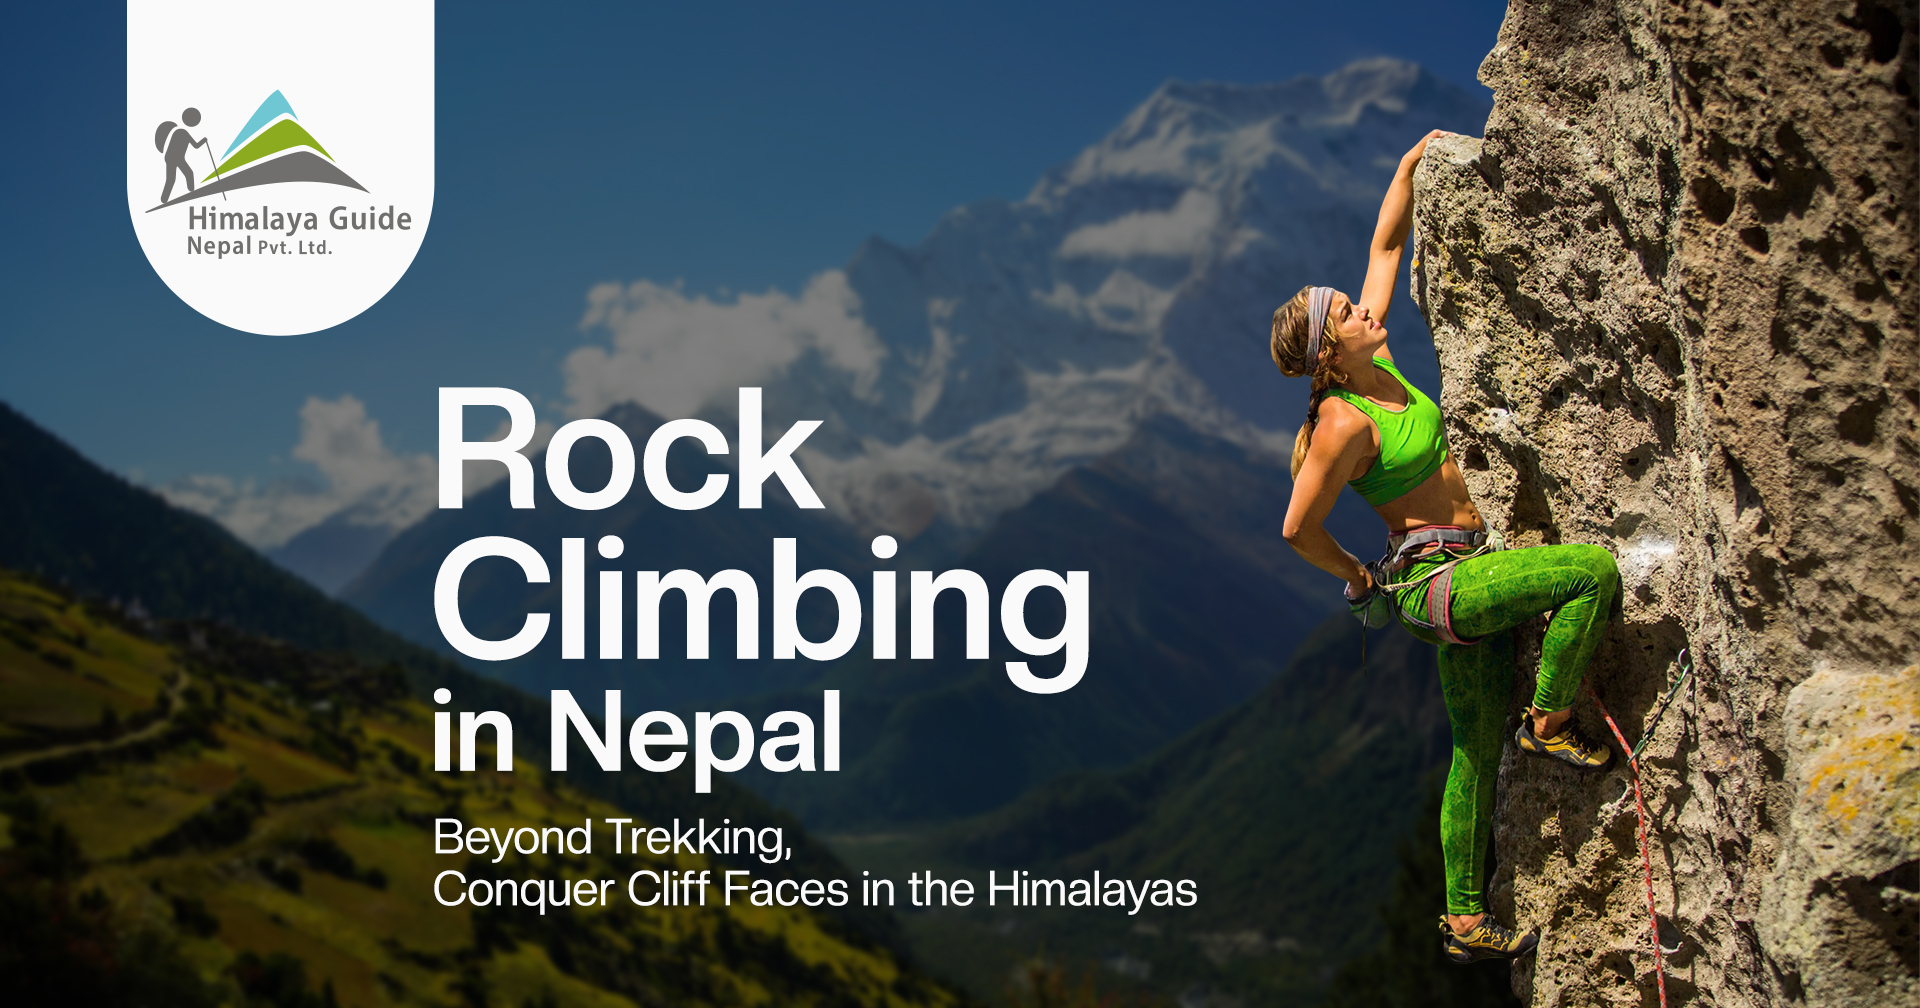 Rock climbing in Nepal